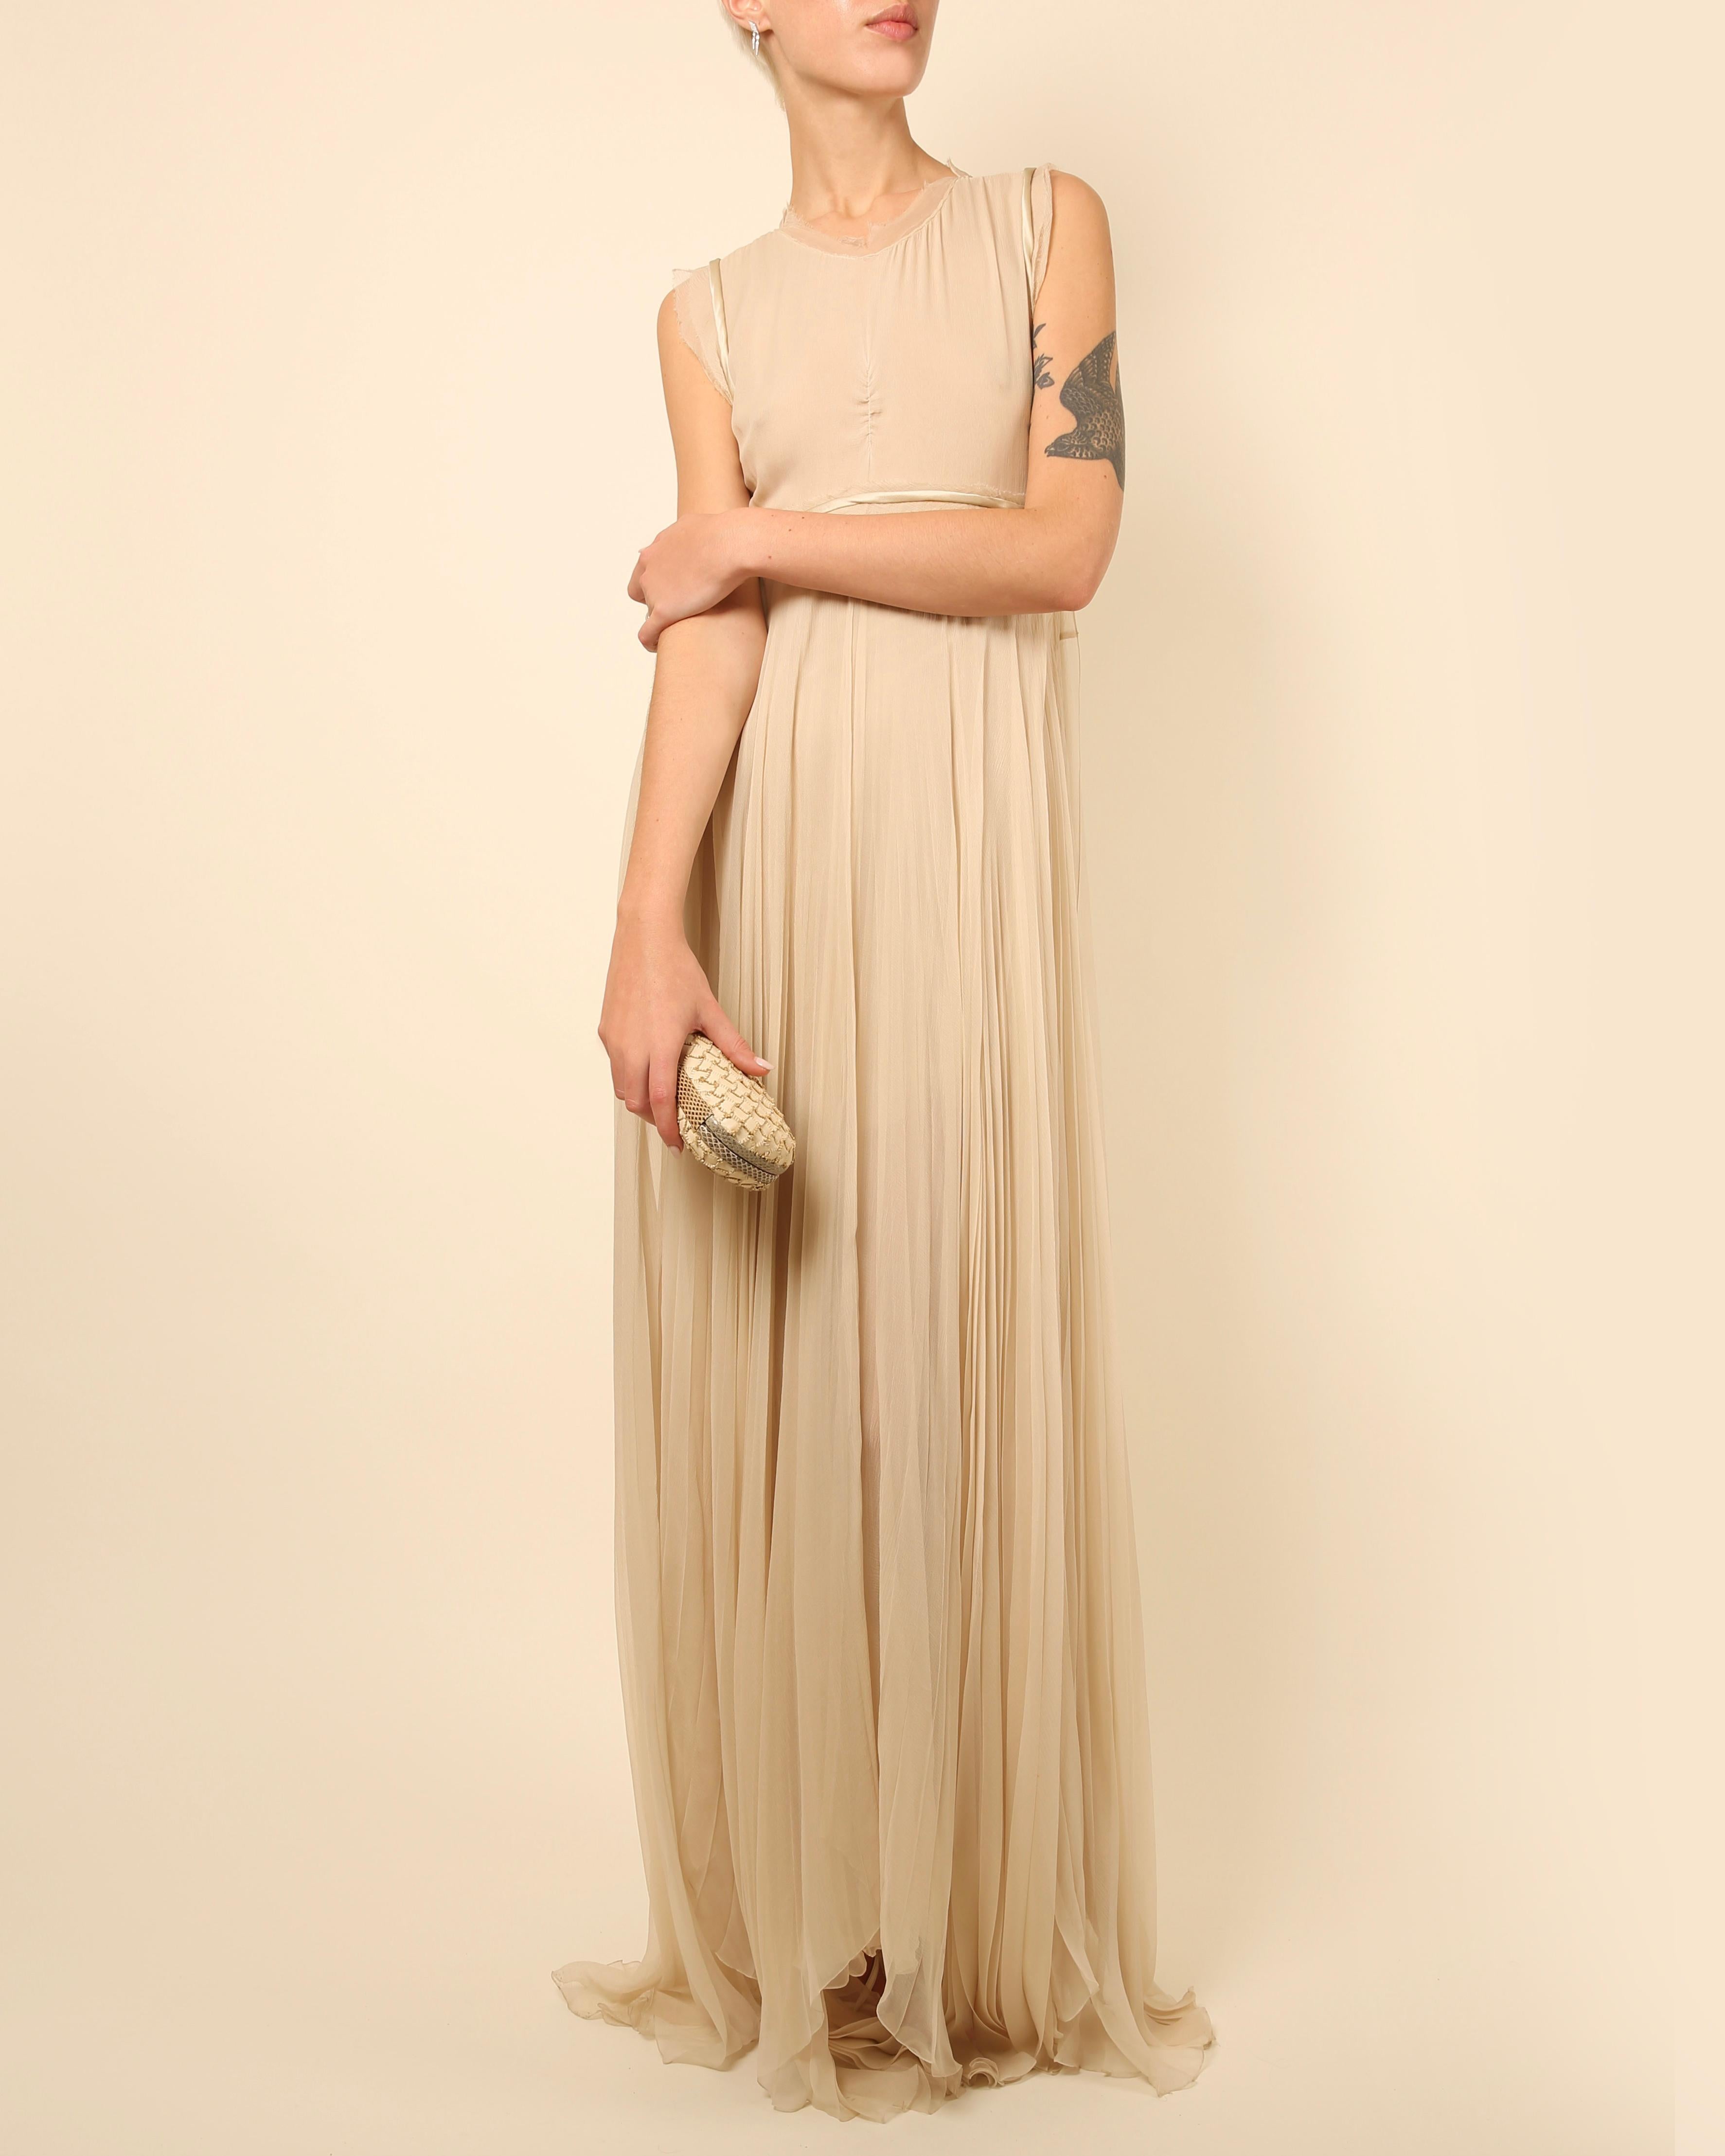 Chloe S/S10 ivory white beige chiffon silk layered sleeveless wedding dress gown For Sale 2